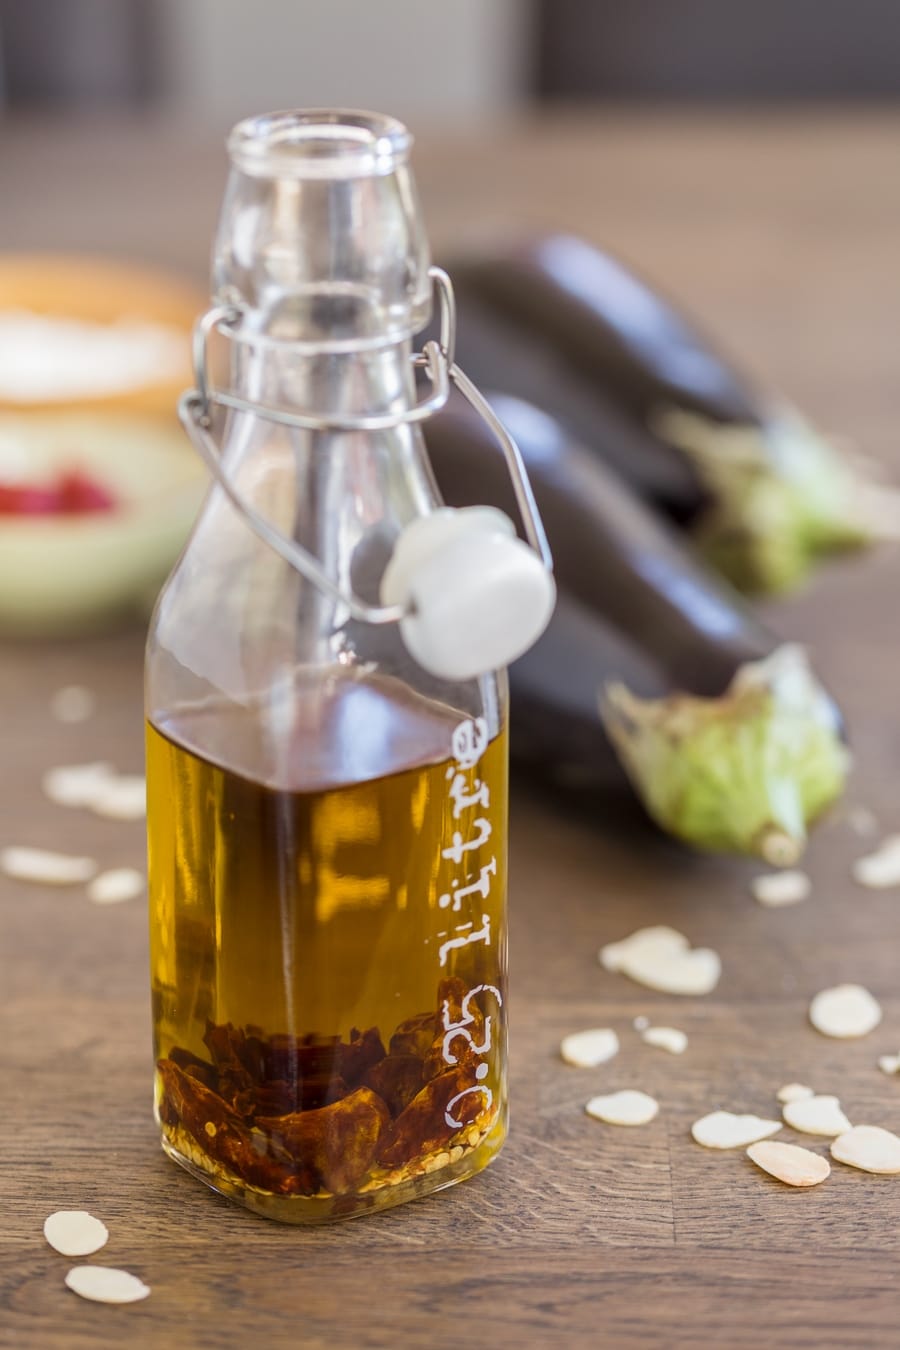 Italian chili oil in a glass bottle.